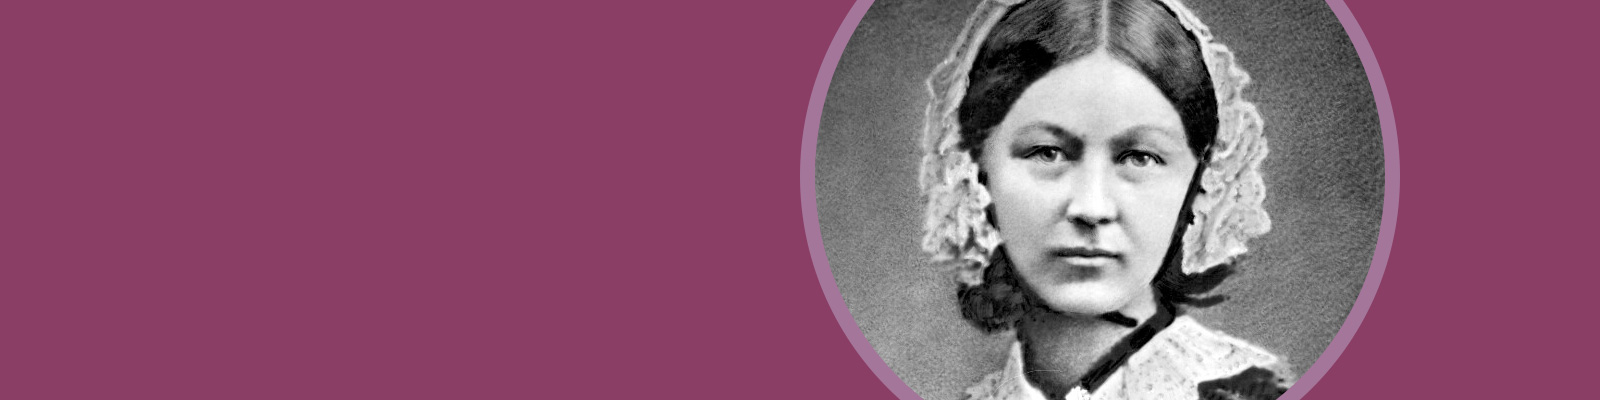 Pioneering statistician Florence Nightingale